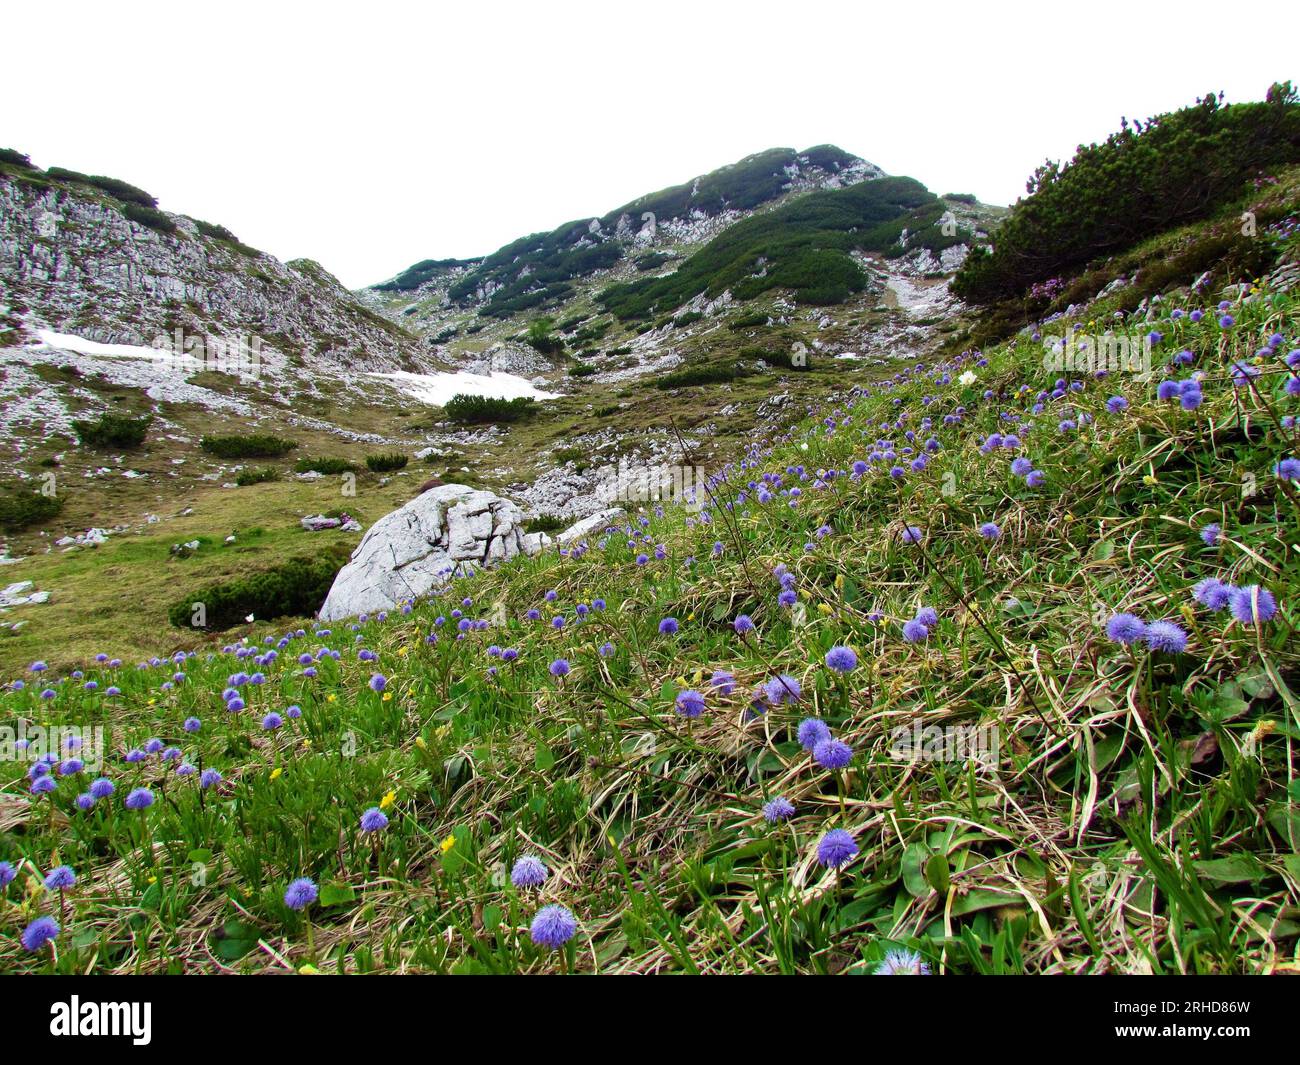 Alpine landscape in Julian alps and Triglav national park, Slovenia with purple heart-leaved globe daisy (Globularia cordifolia) flowers covering thr Stock Photo